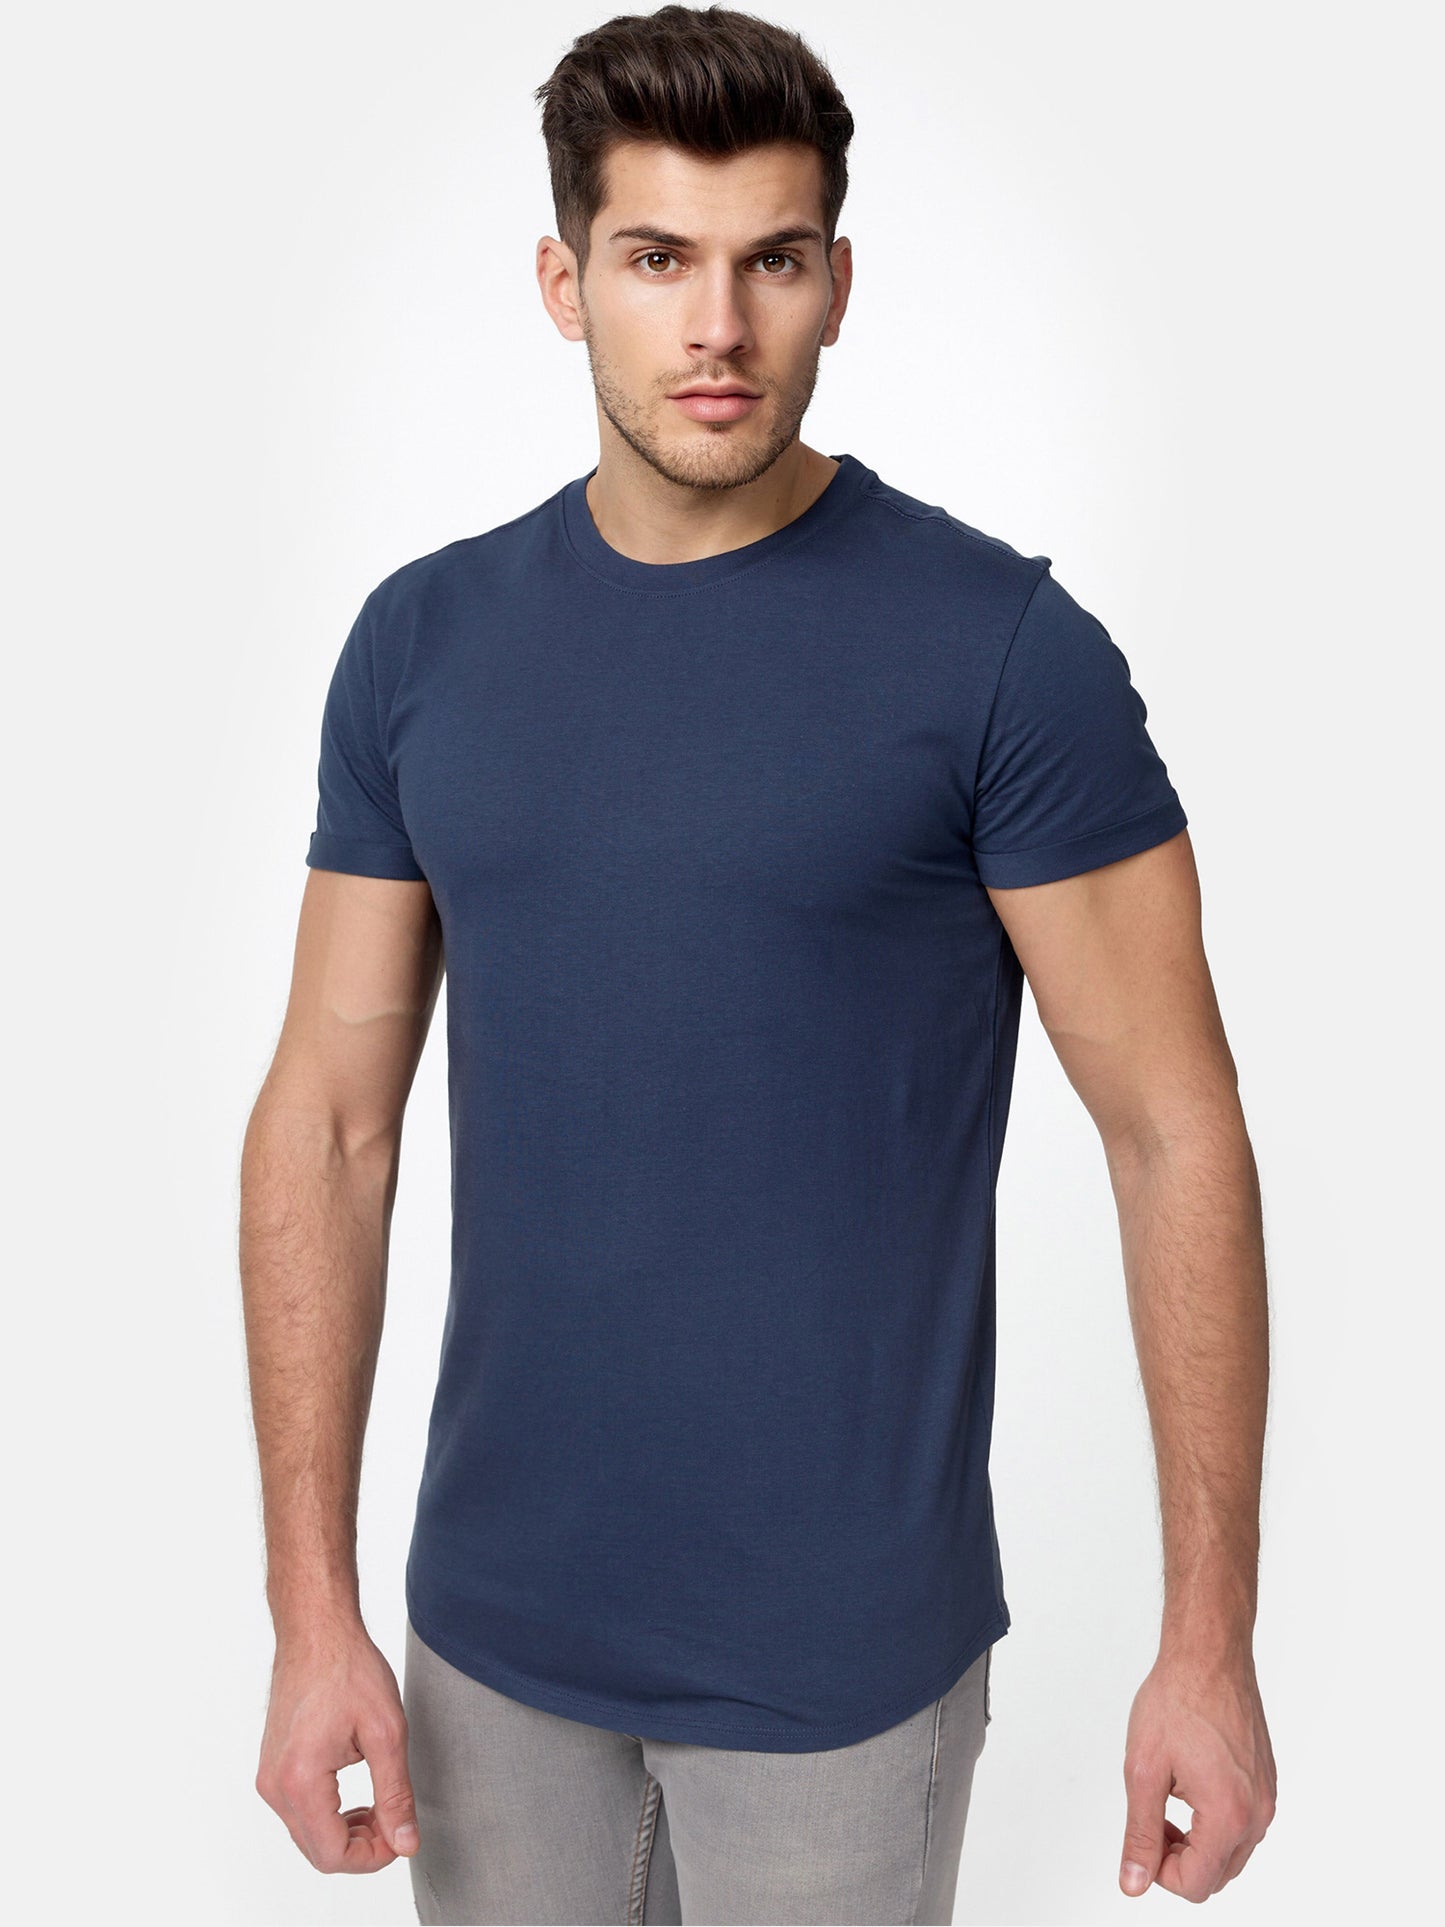 Tazzio Herren T-Shirt Rundhals E105